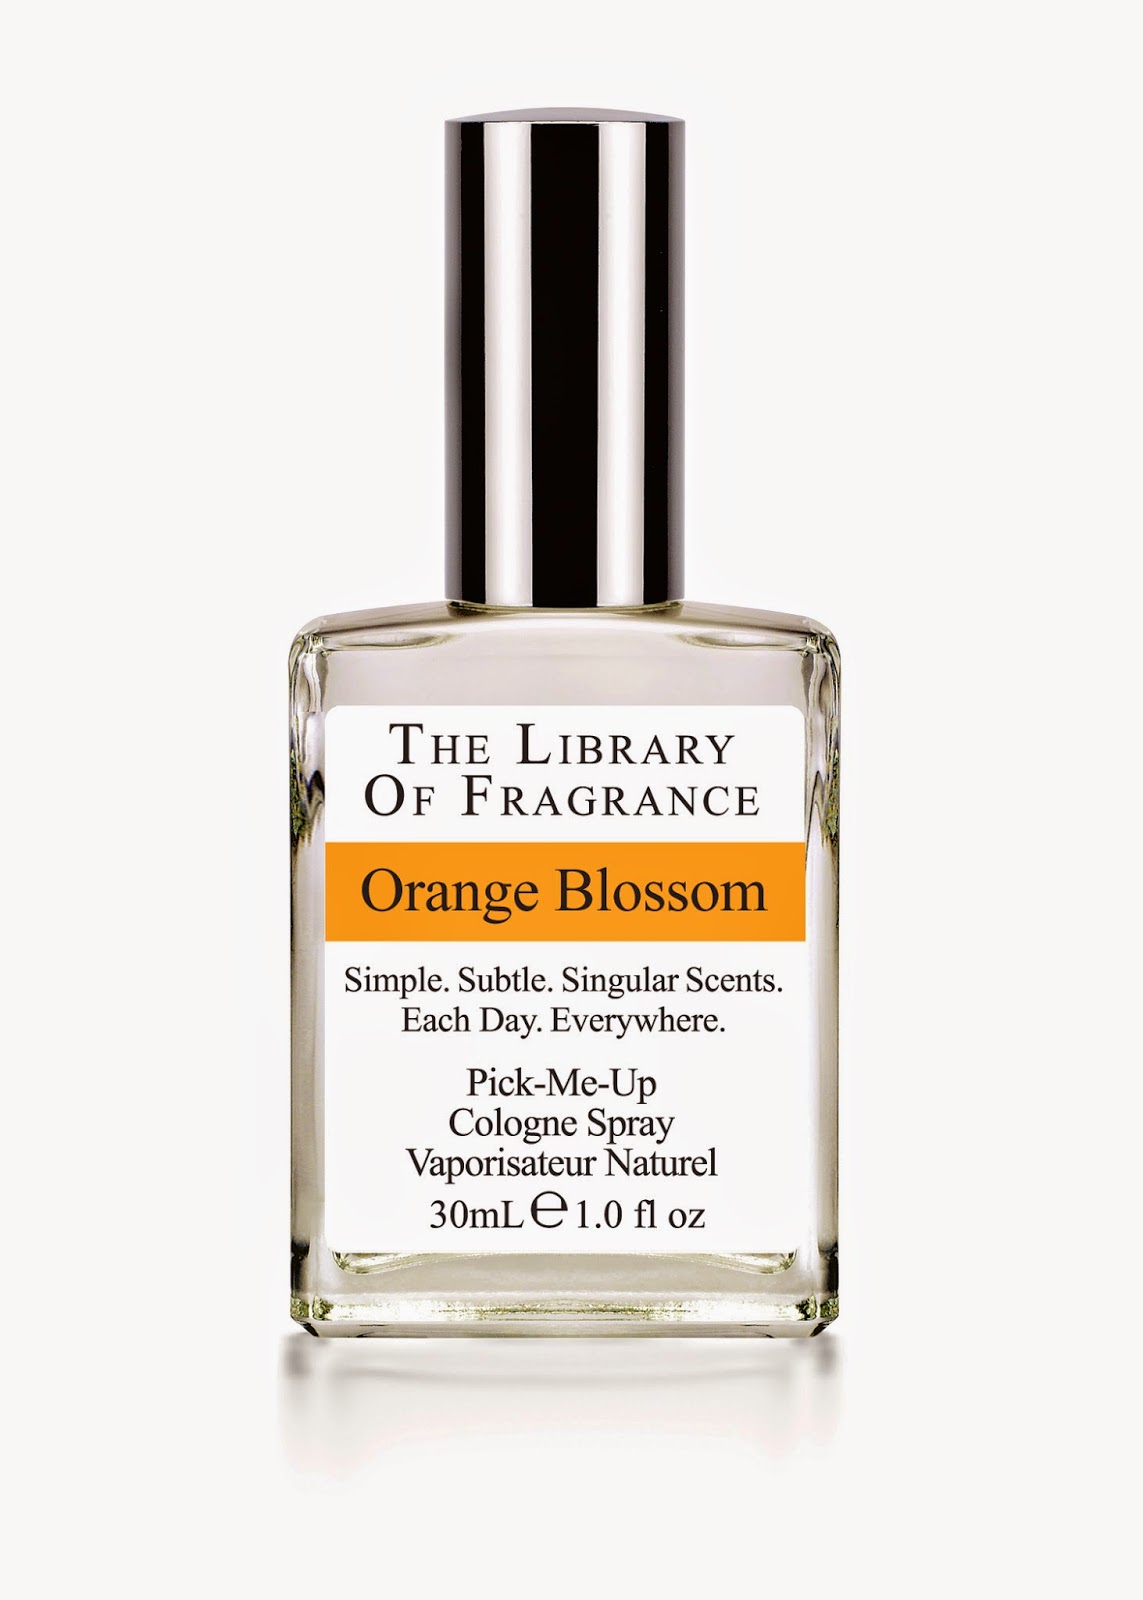 Orange blossom fragrance